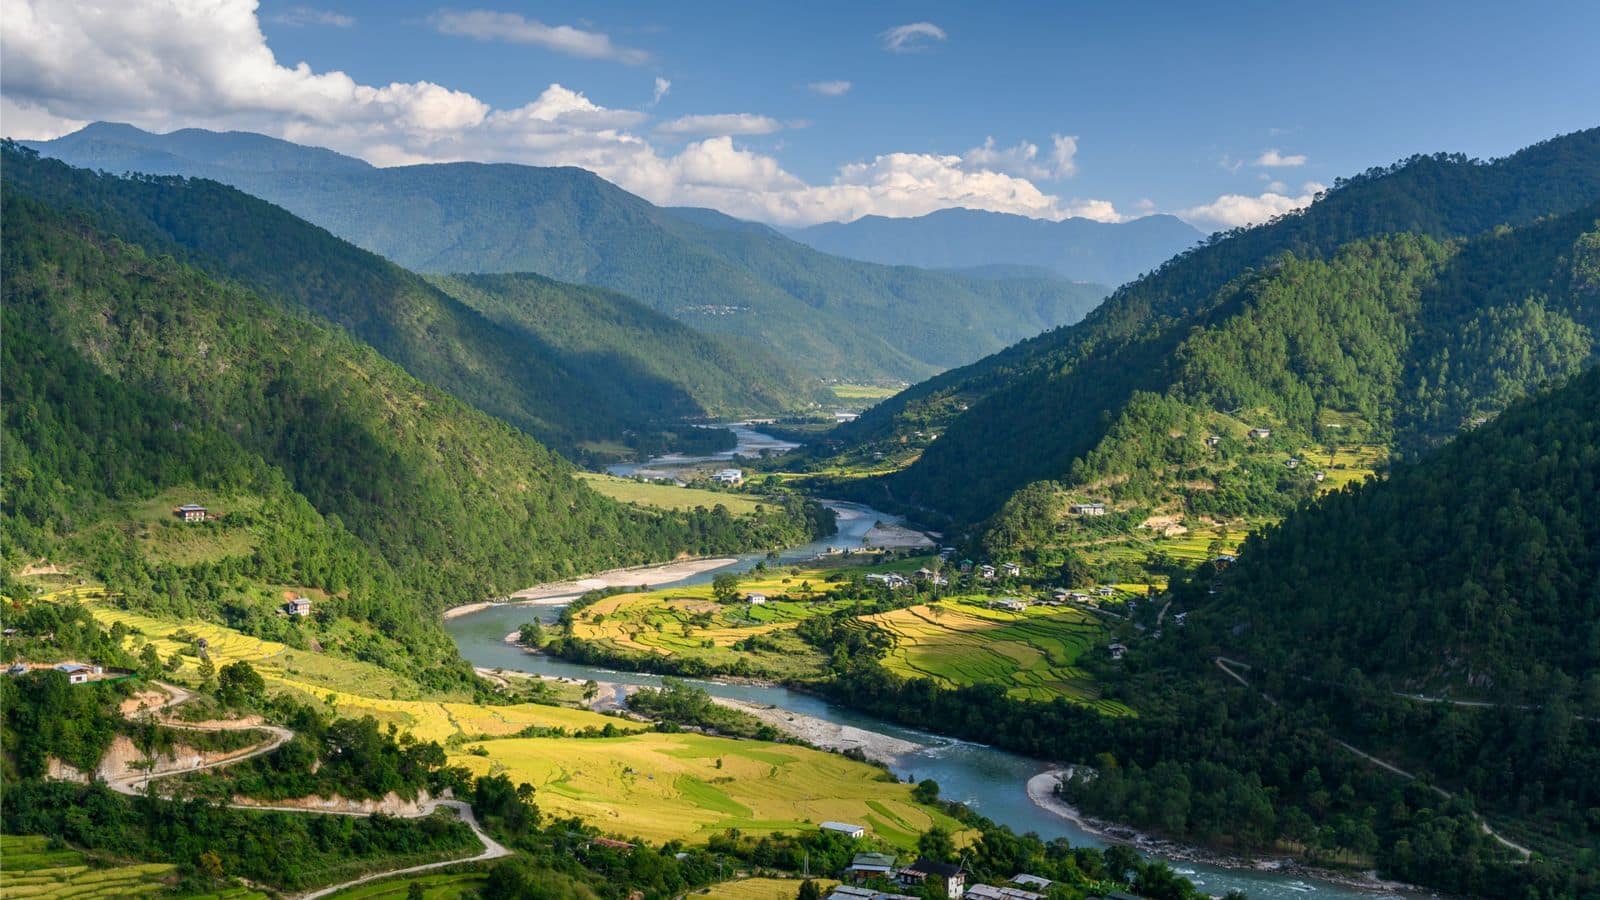 Explore Bhutan's majestic mountain passes